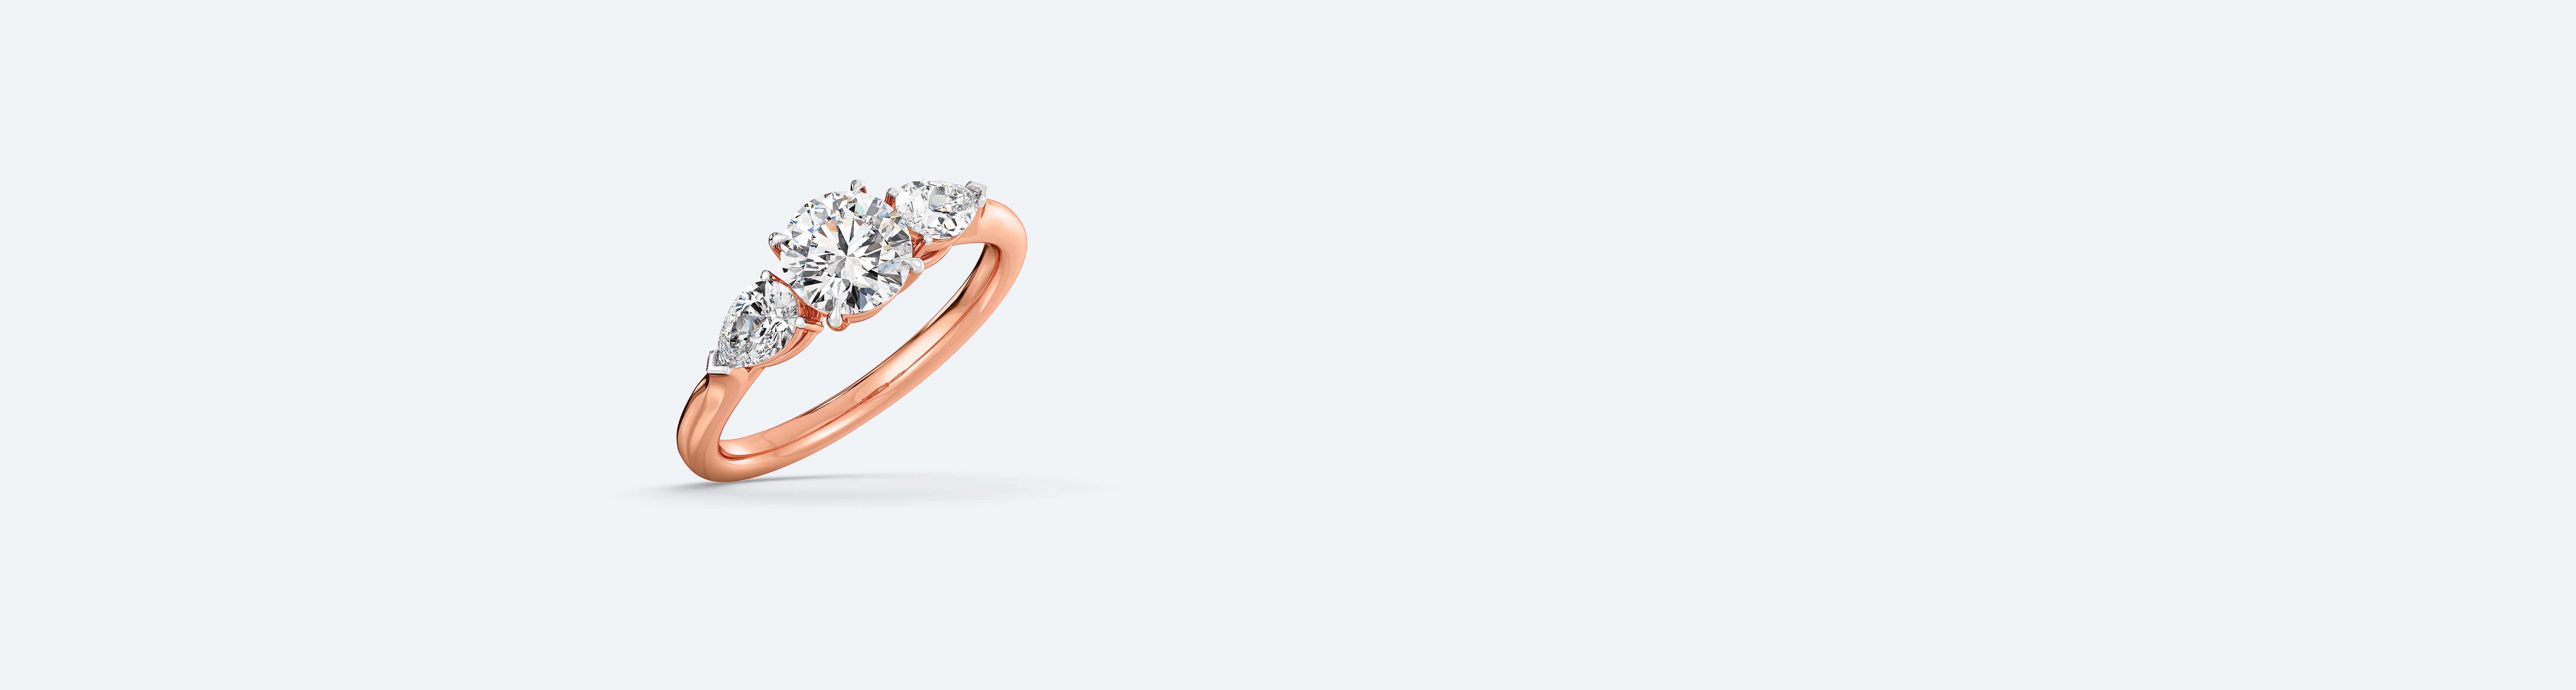 4 Ct White Diamond Ring Great Shine Clarity VVS1 Certified Gift for  Partner, Gift for Her - Etsy